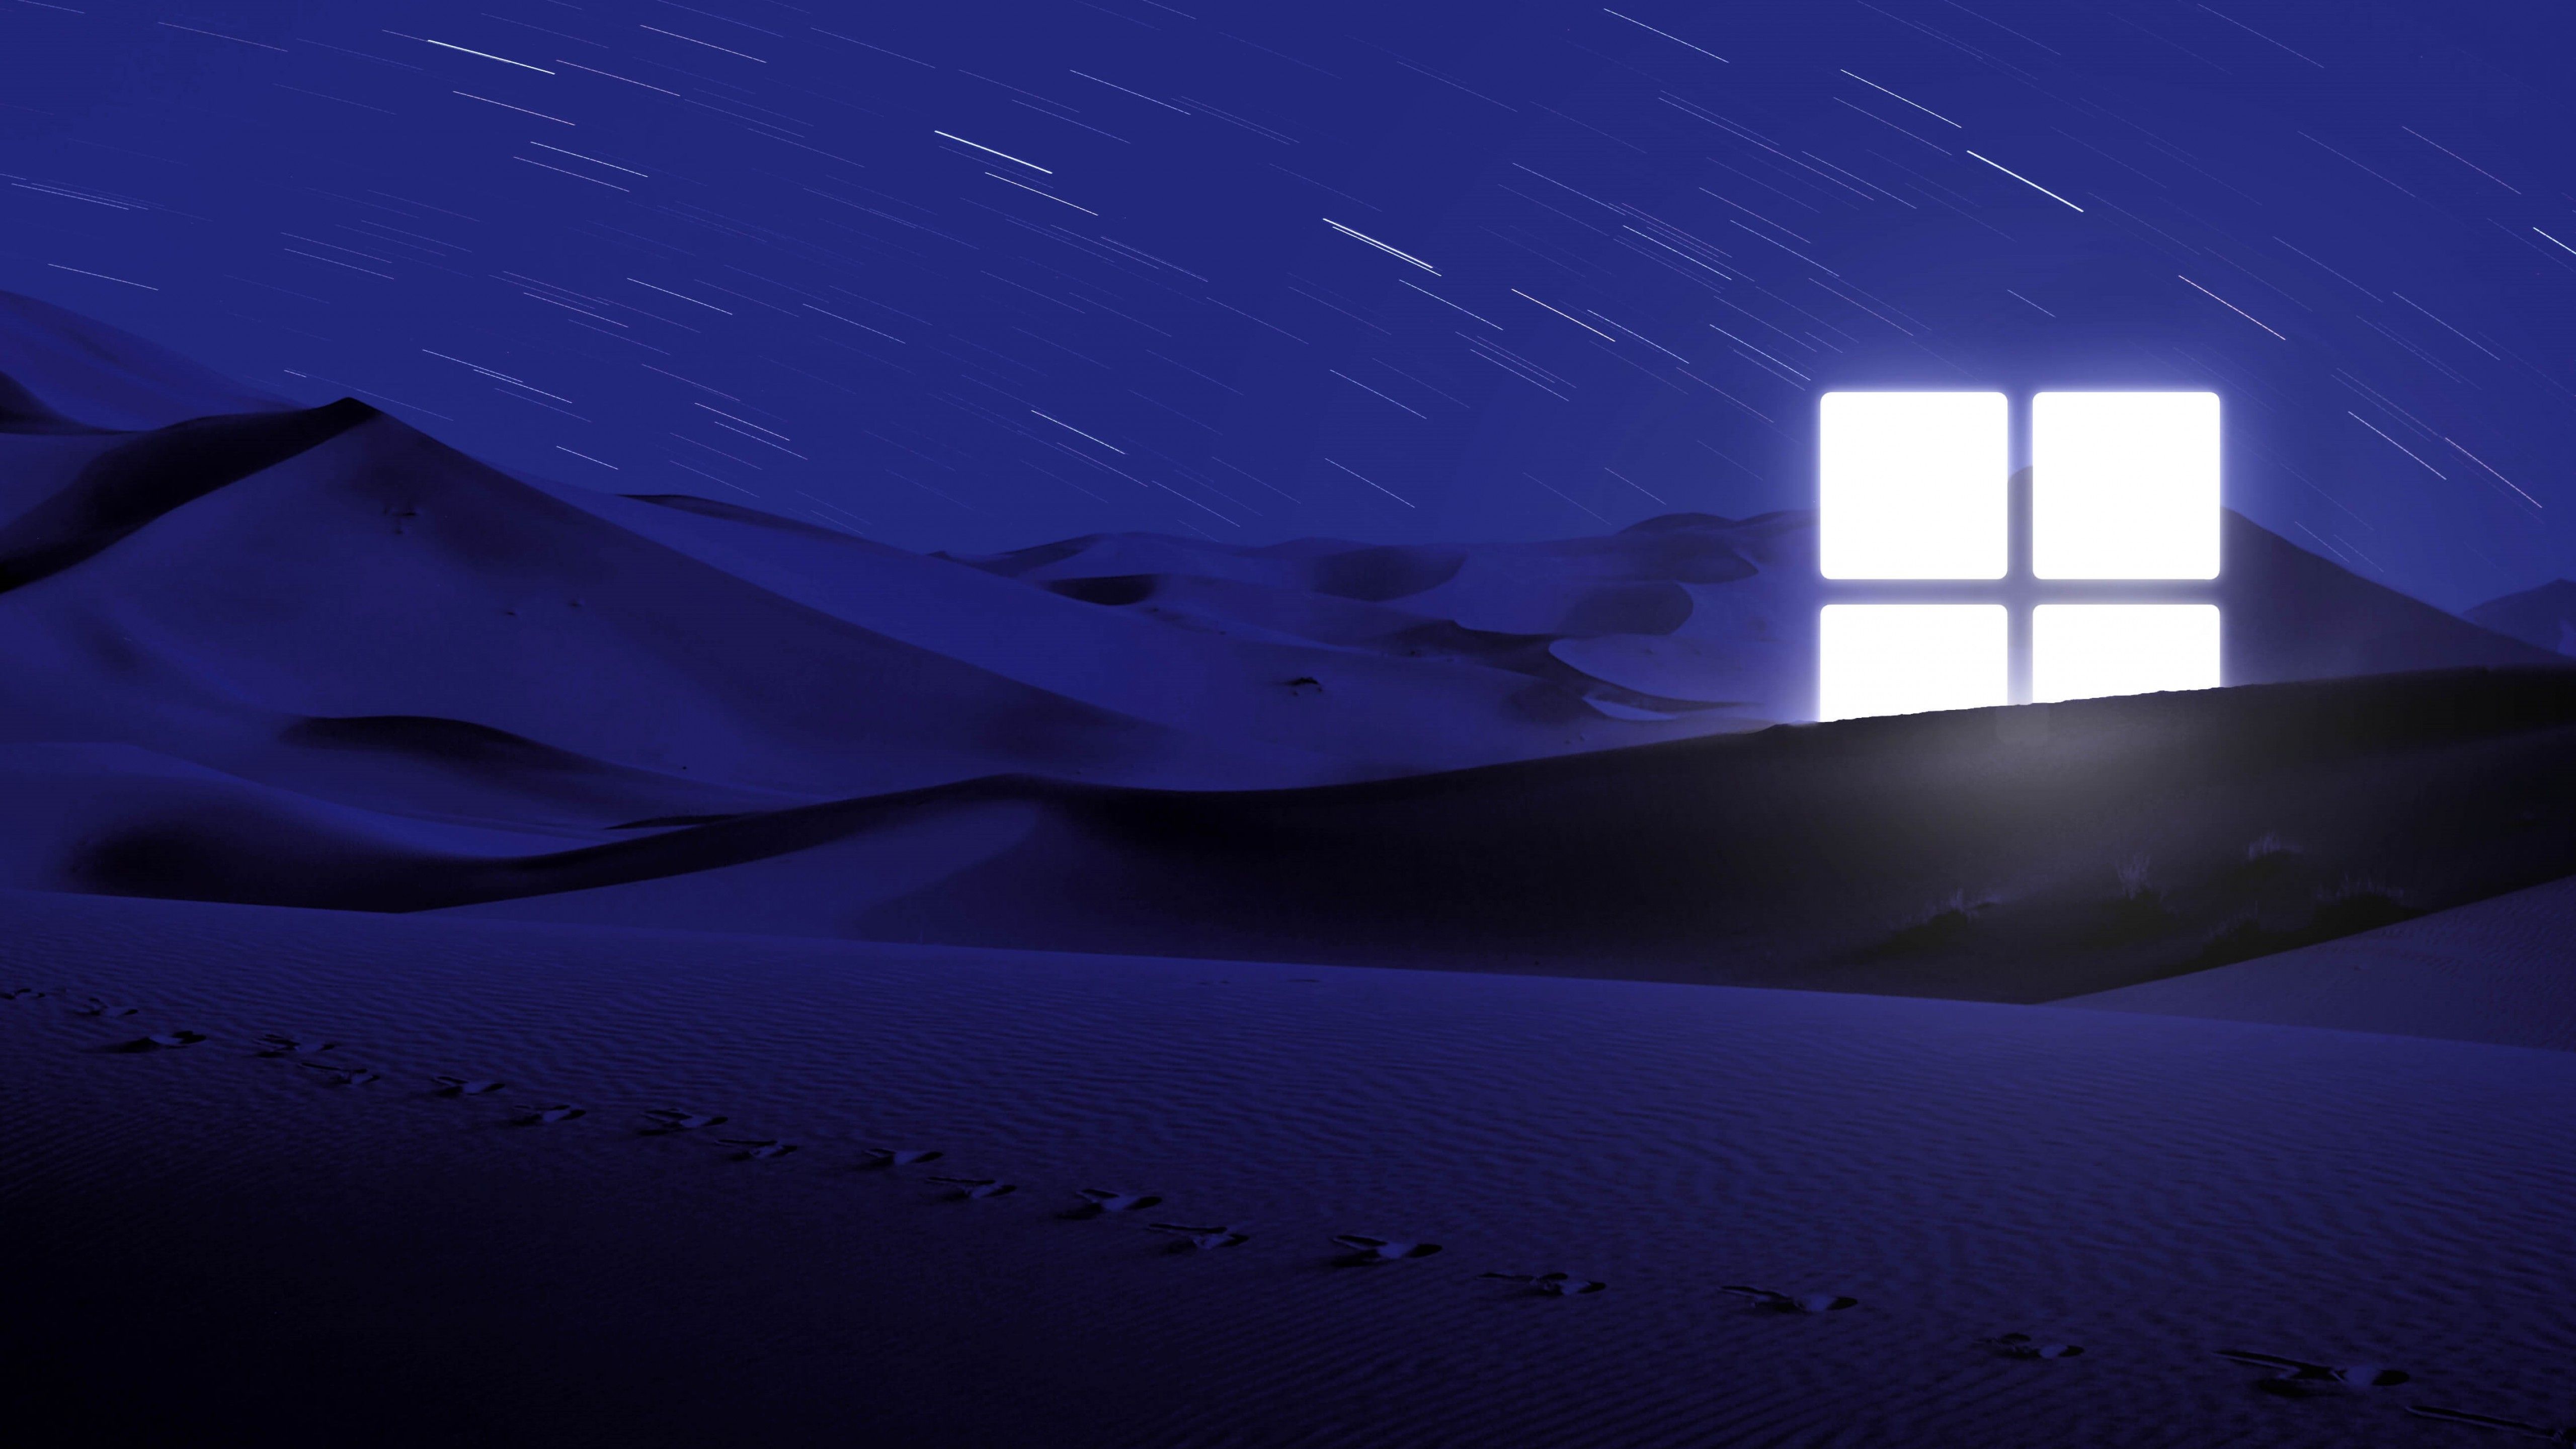 Desert 4K Wallpaper, Night, Blue, Windows logo, Glowing, Star Trails, Illuminated, 5K, Nature